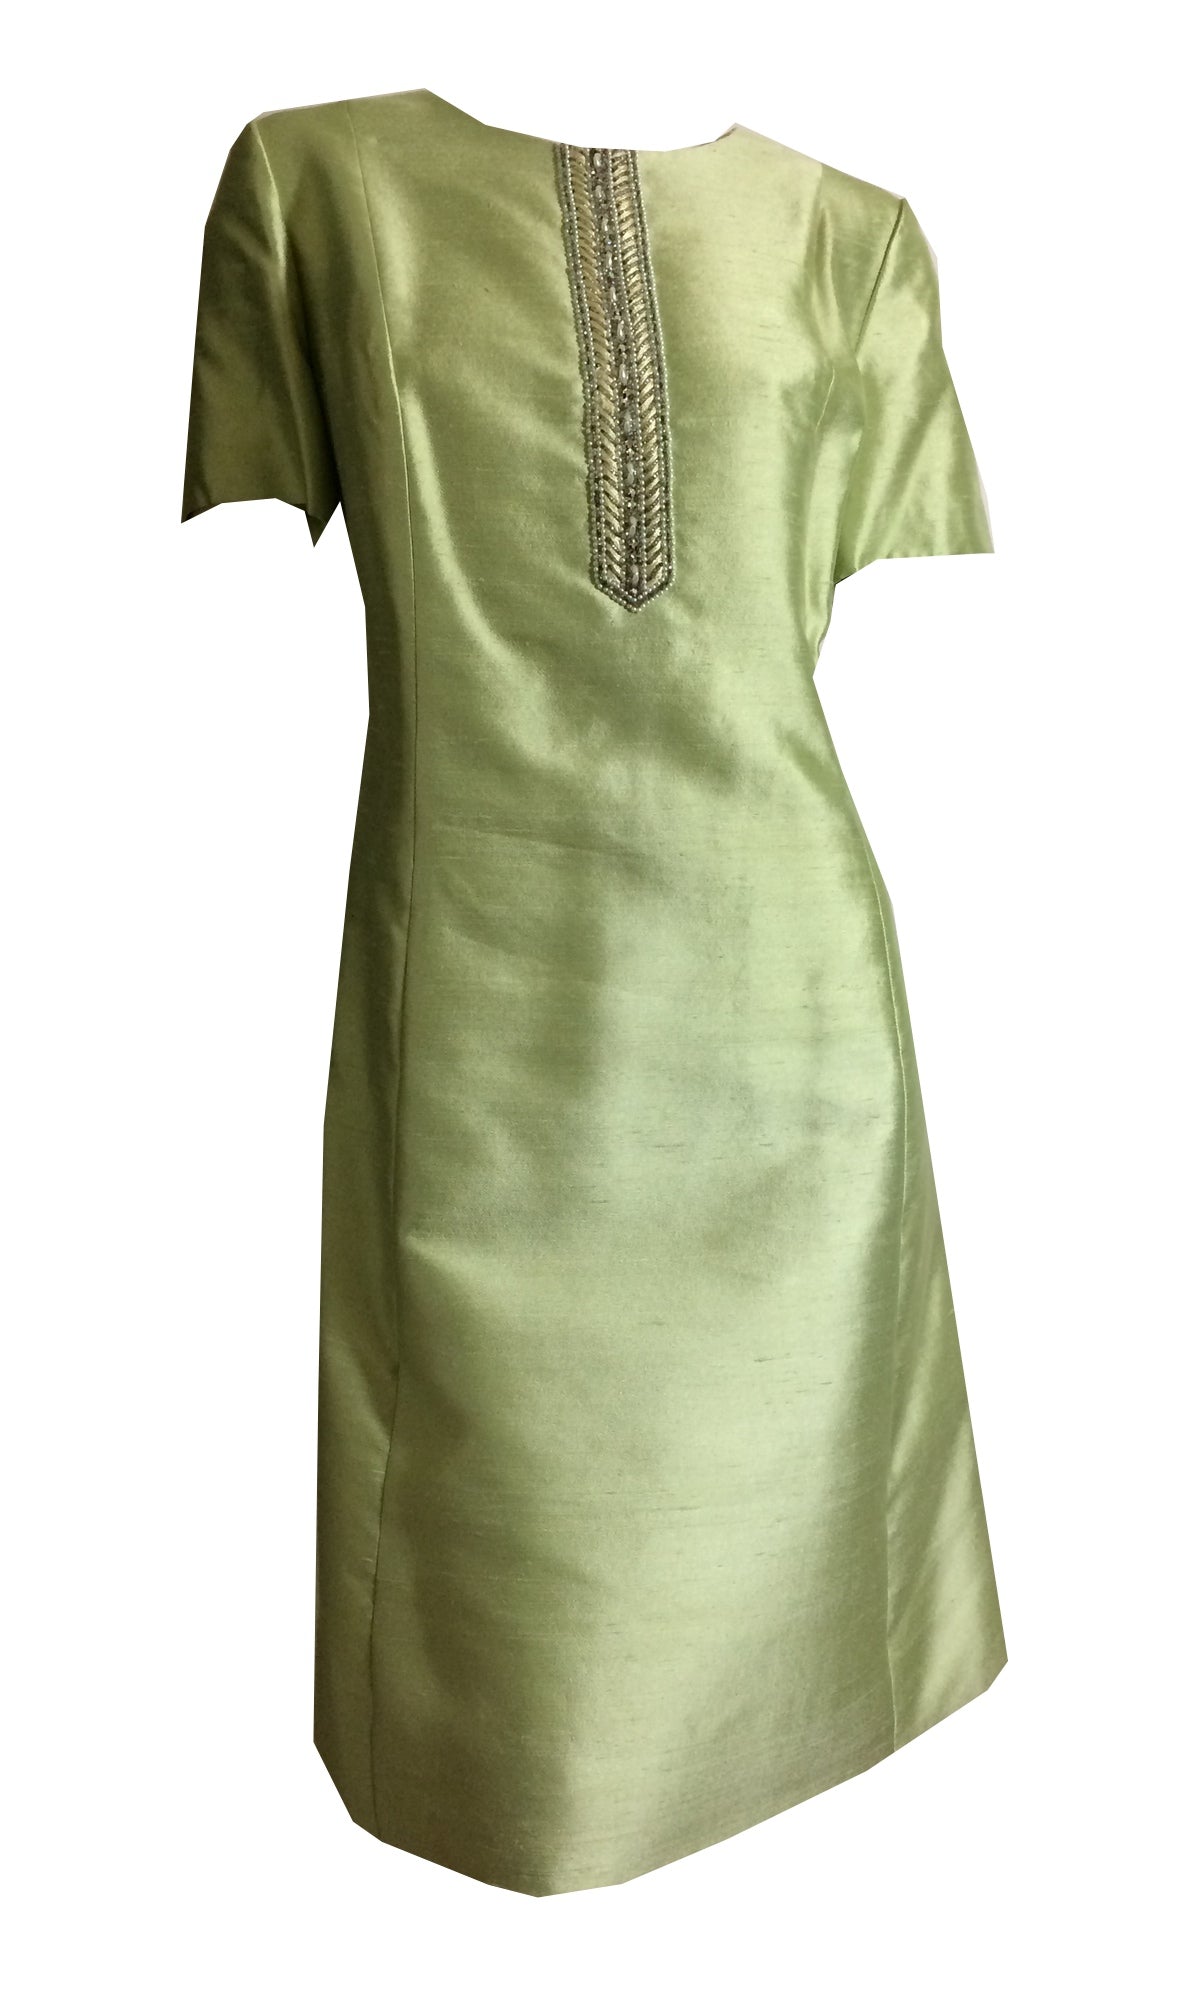 Pistachio Green Slubbed Silk Dress and Jacket with Beading circa 1960s